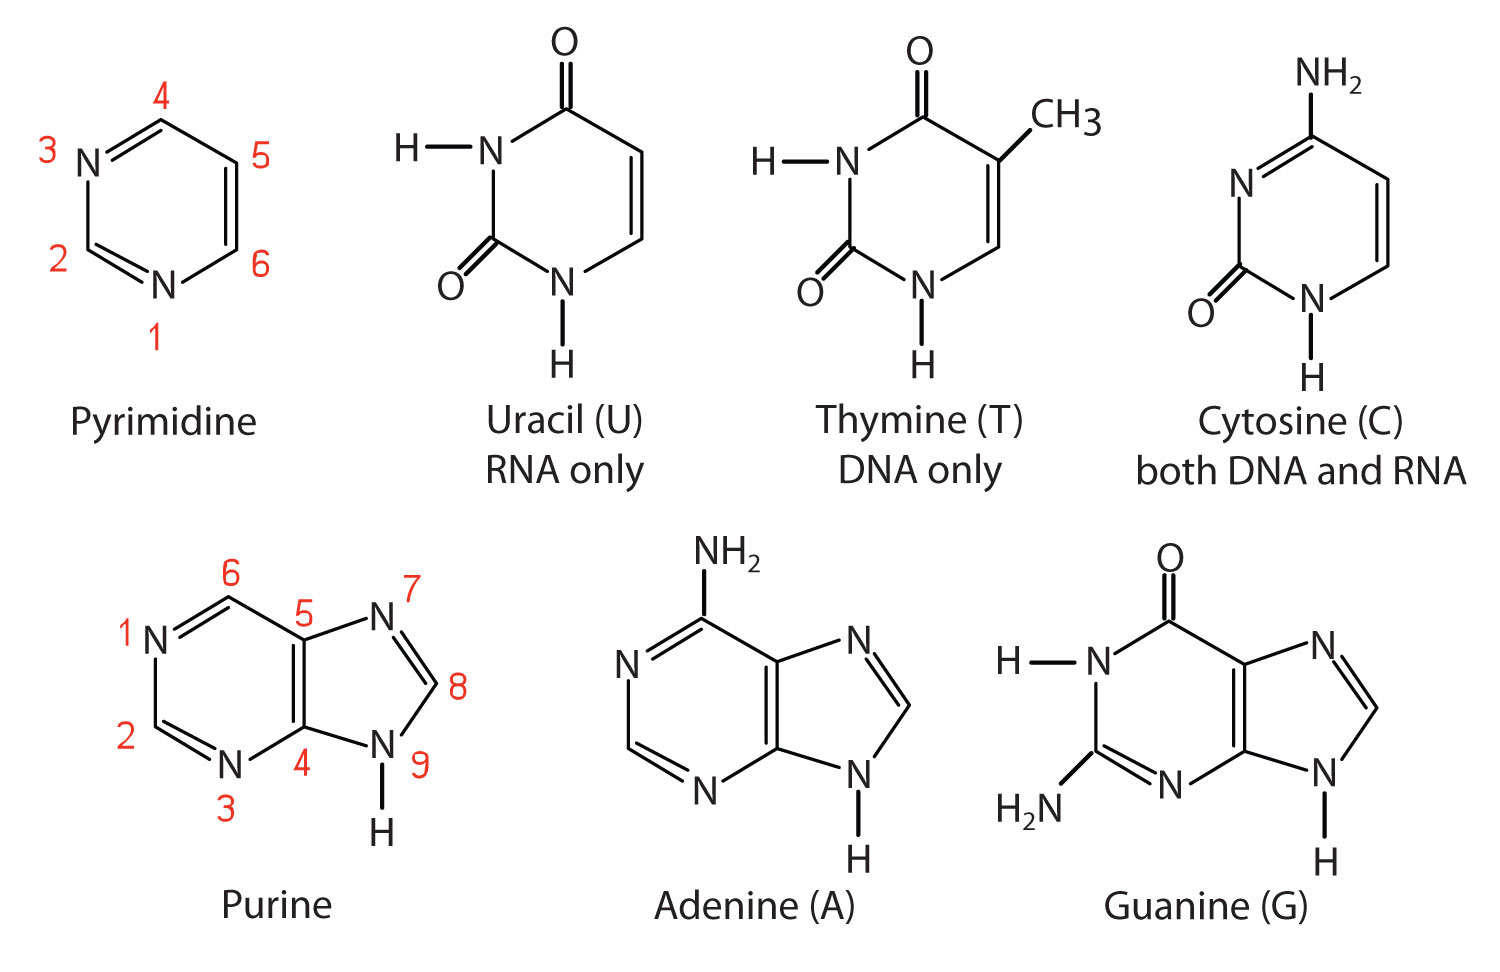 structure of dna nucleotide bases